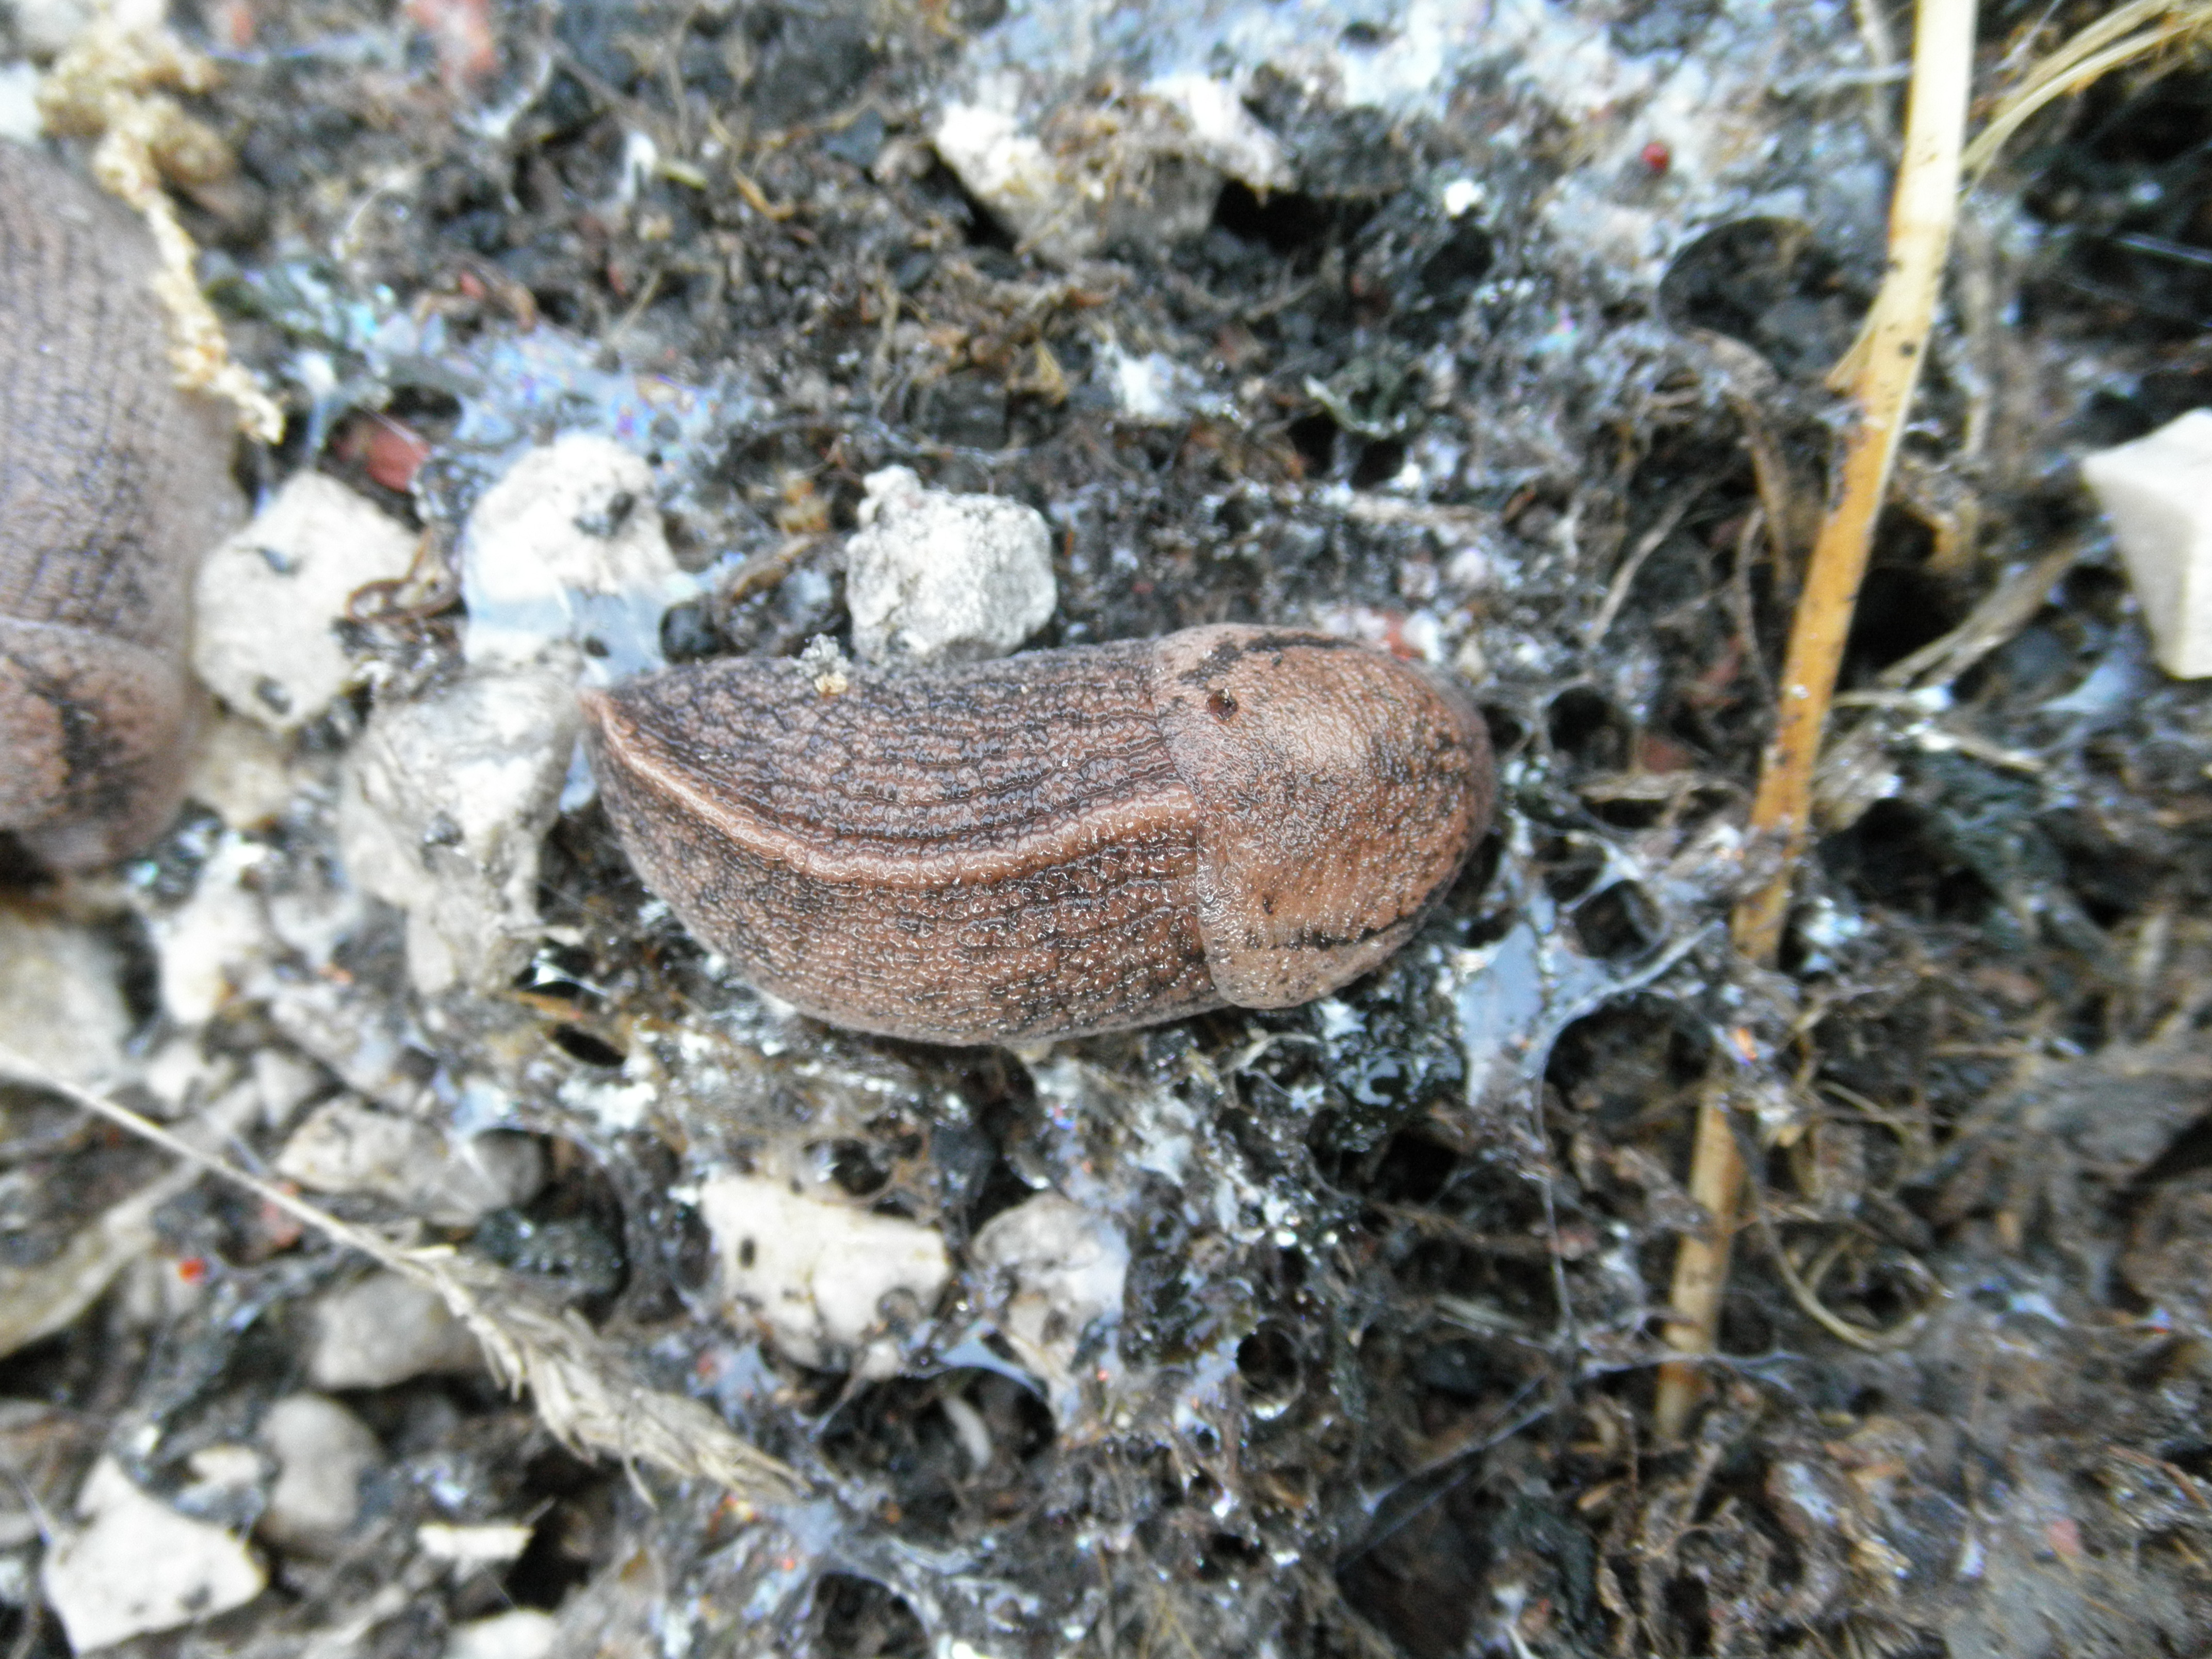 dorsal view of a Tandonia rustica